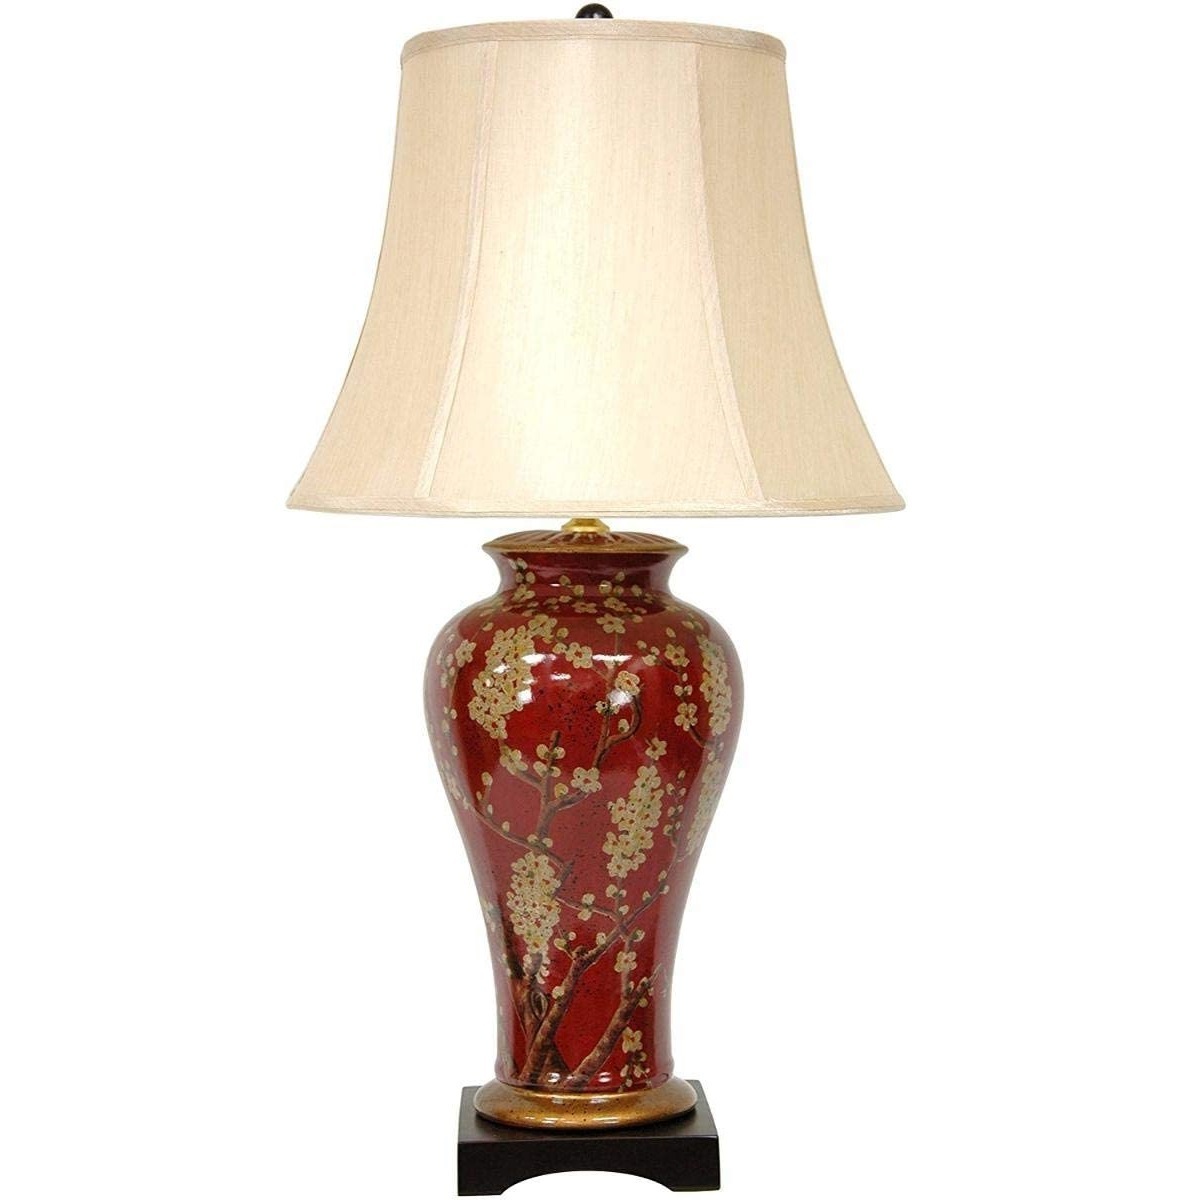 Charming Japanese Vase Lamp